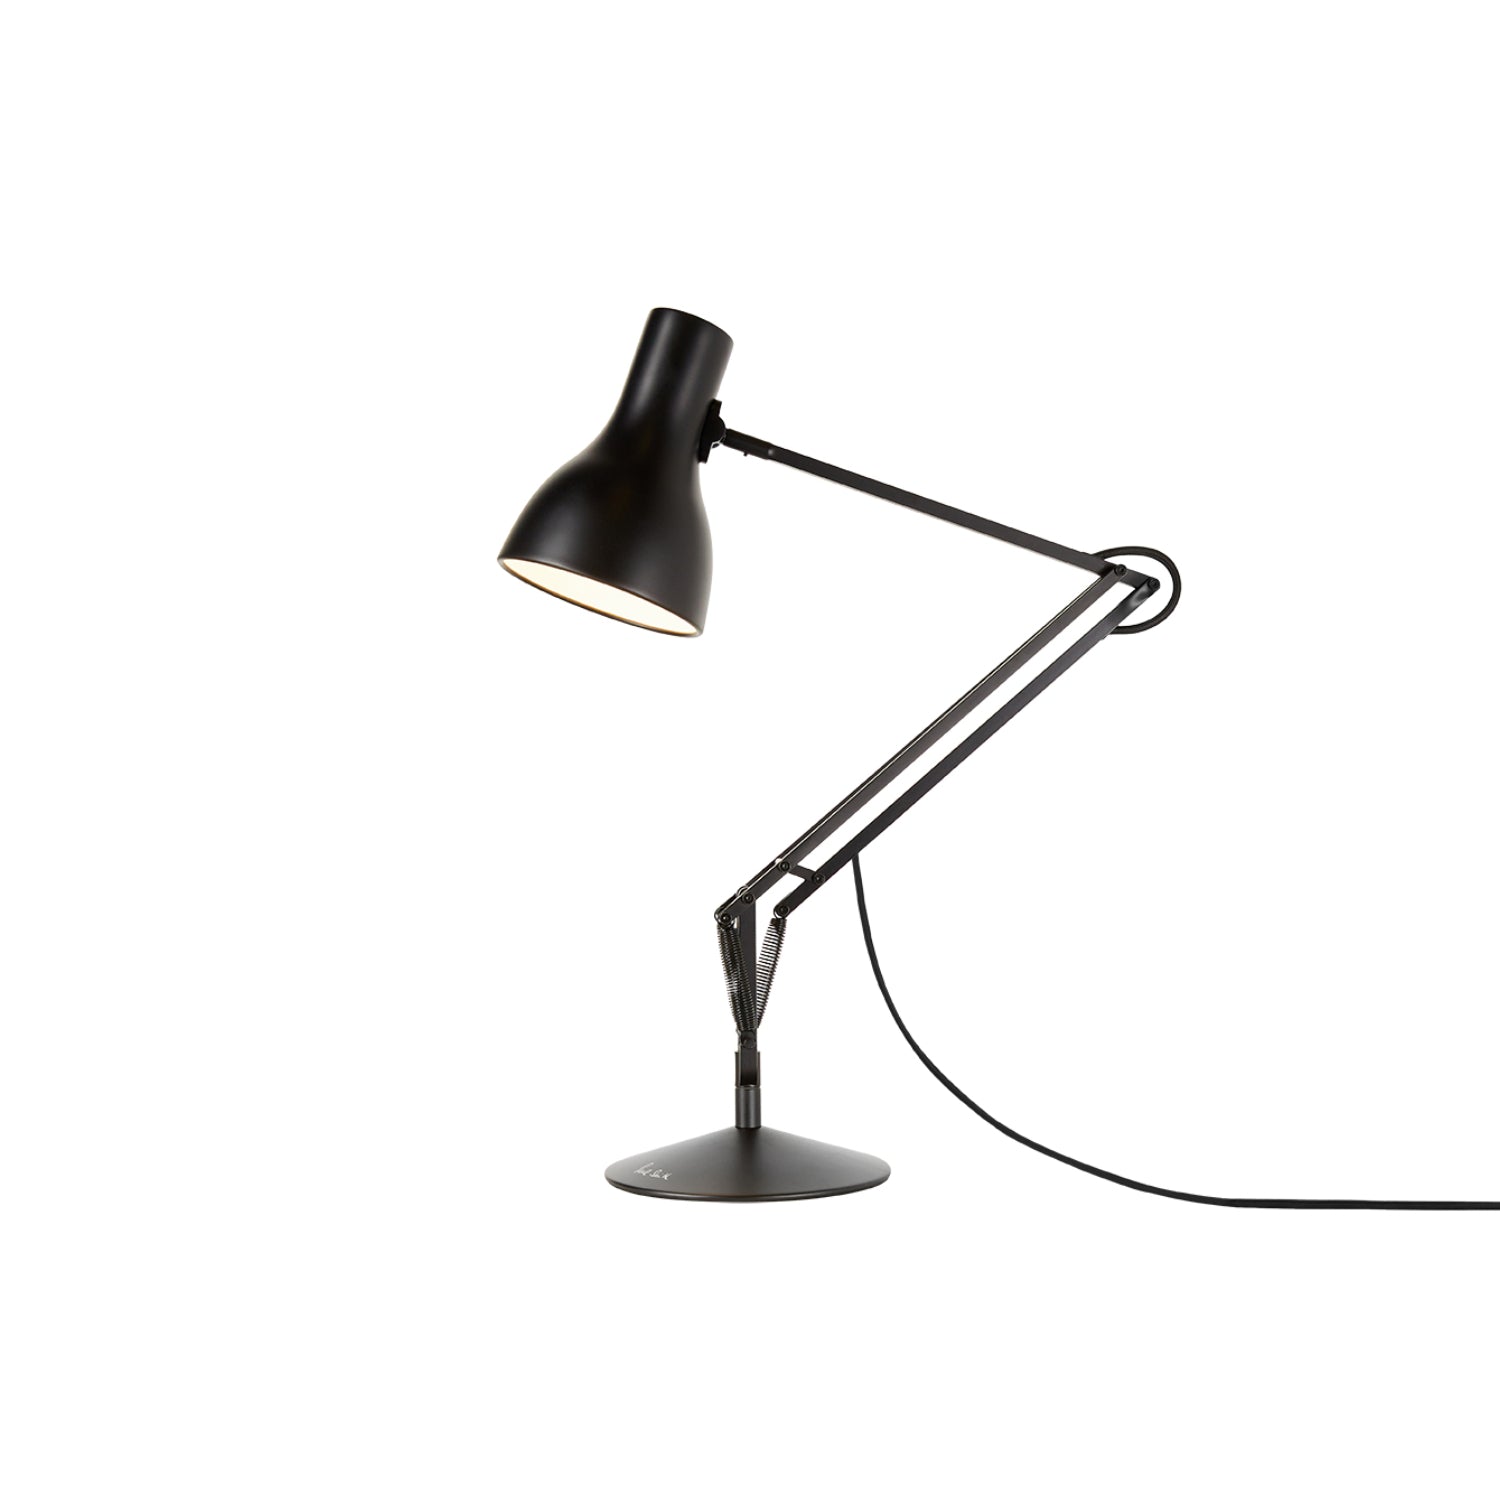 Type 75 Desk Lamp: Paul Smith Edition Five